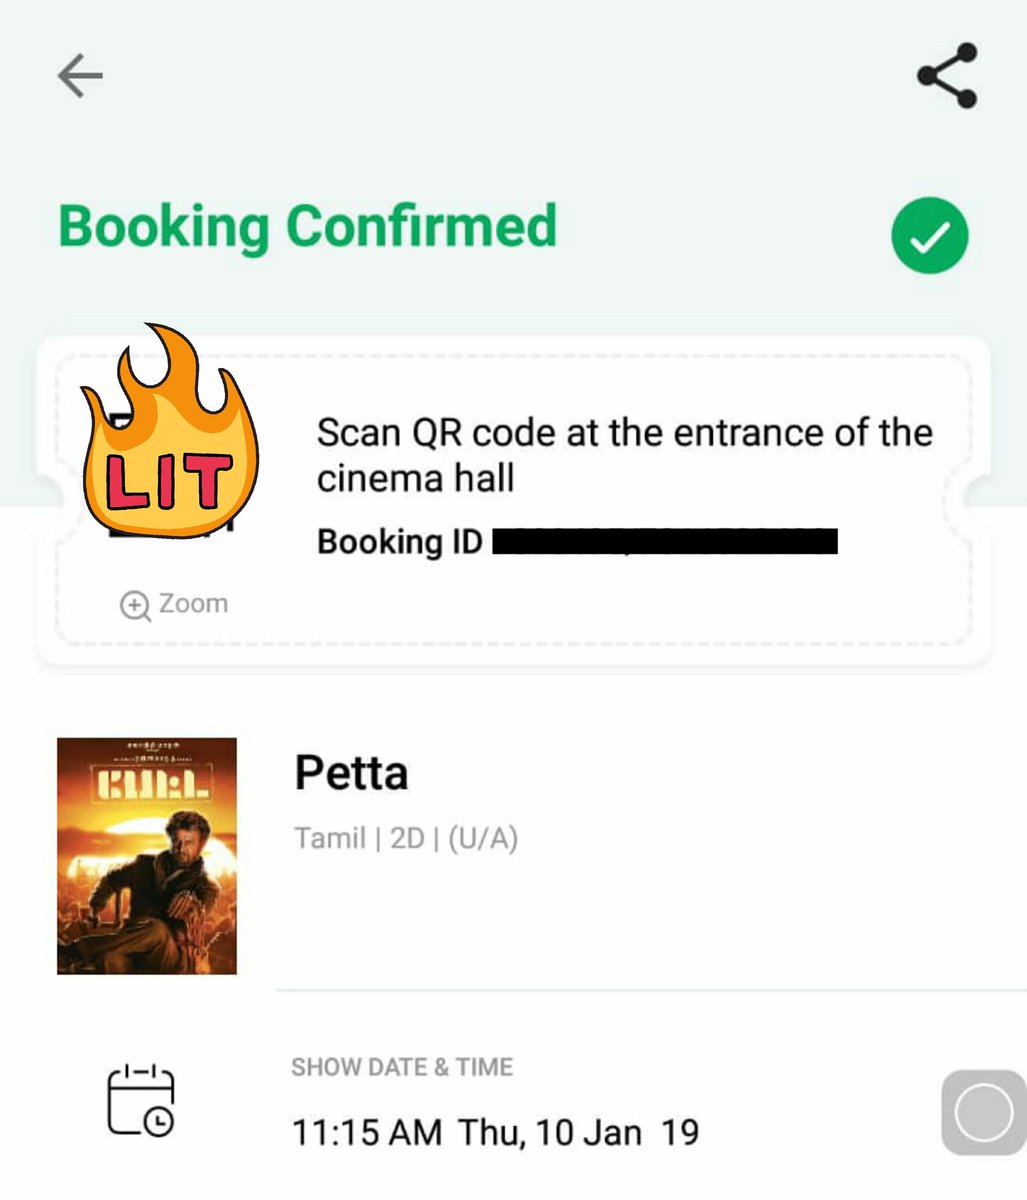 Atlast Booked Tickets For #Petta 🔥

Thalaivar Dharisanam In 37 Hours 😍

#PettaJan10thParaak